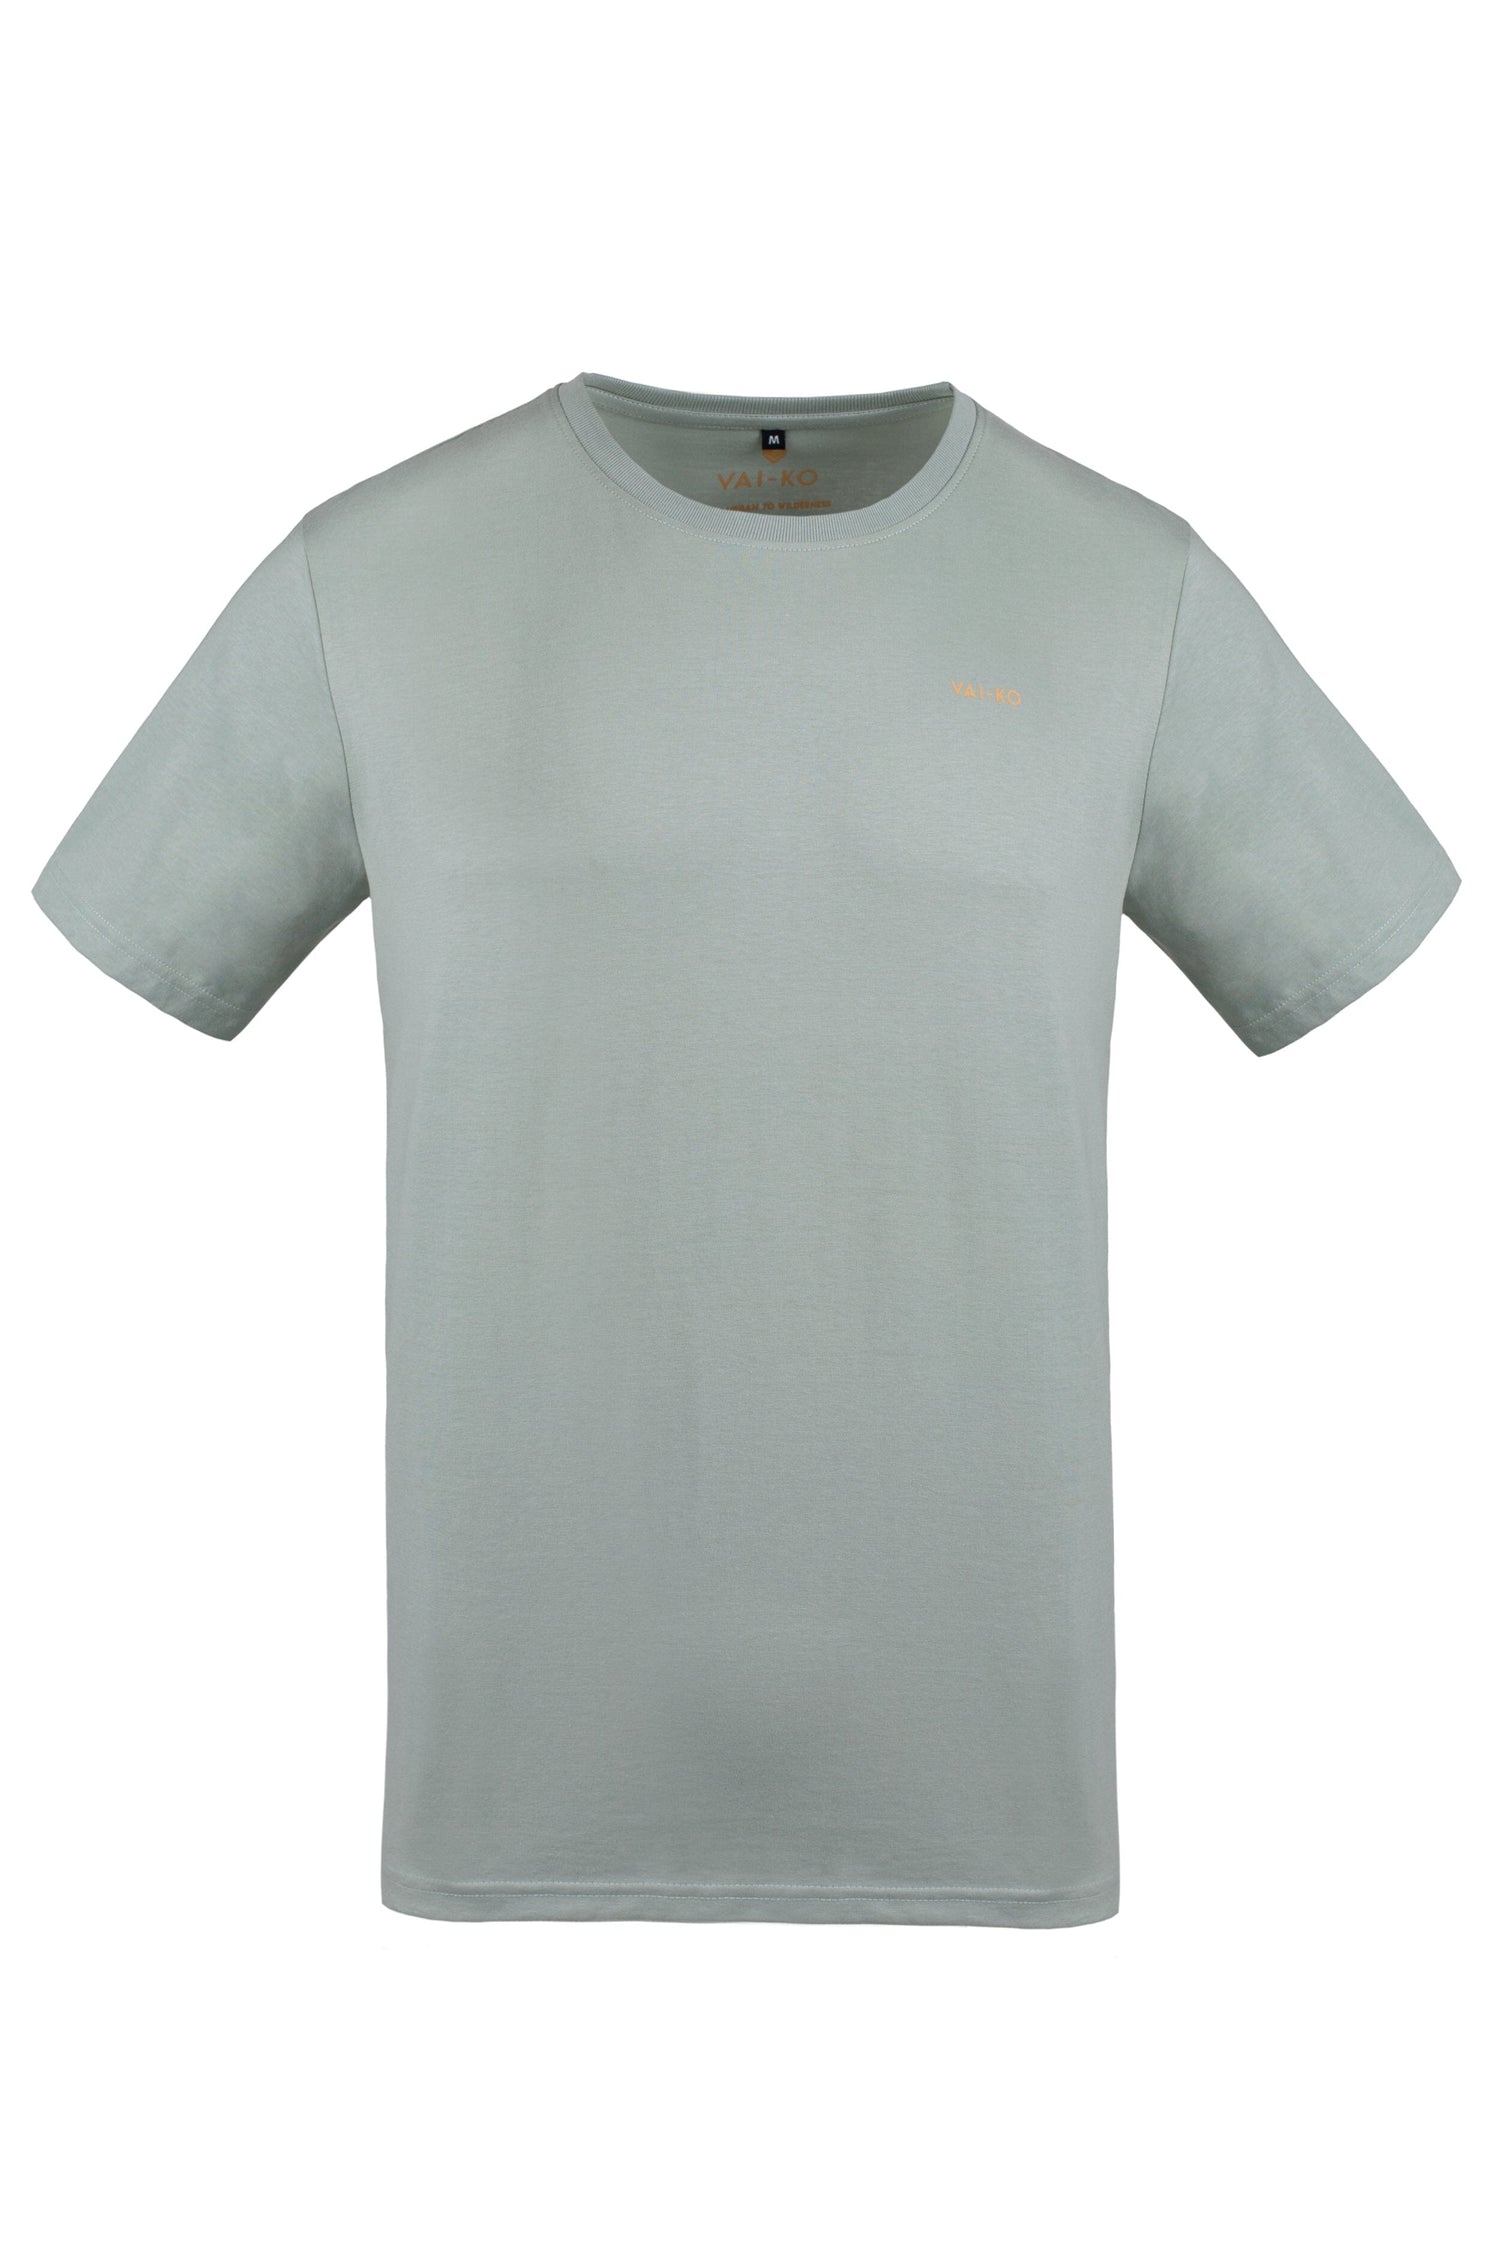 VAI-KØ - M's Kultakero T-shirt - Organic cotton - Weekendbee - sustainable sportswear